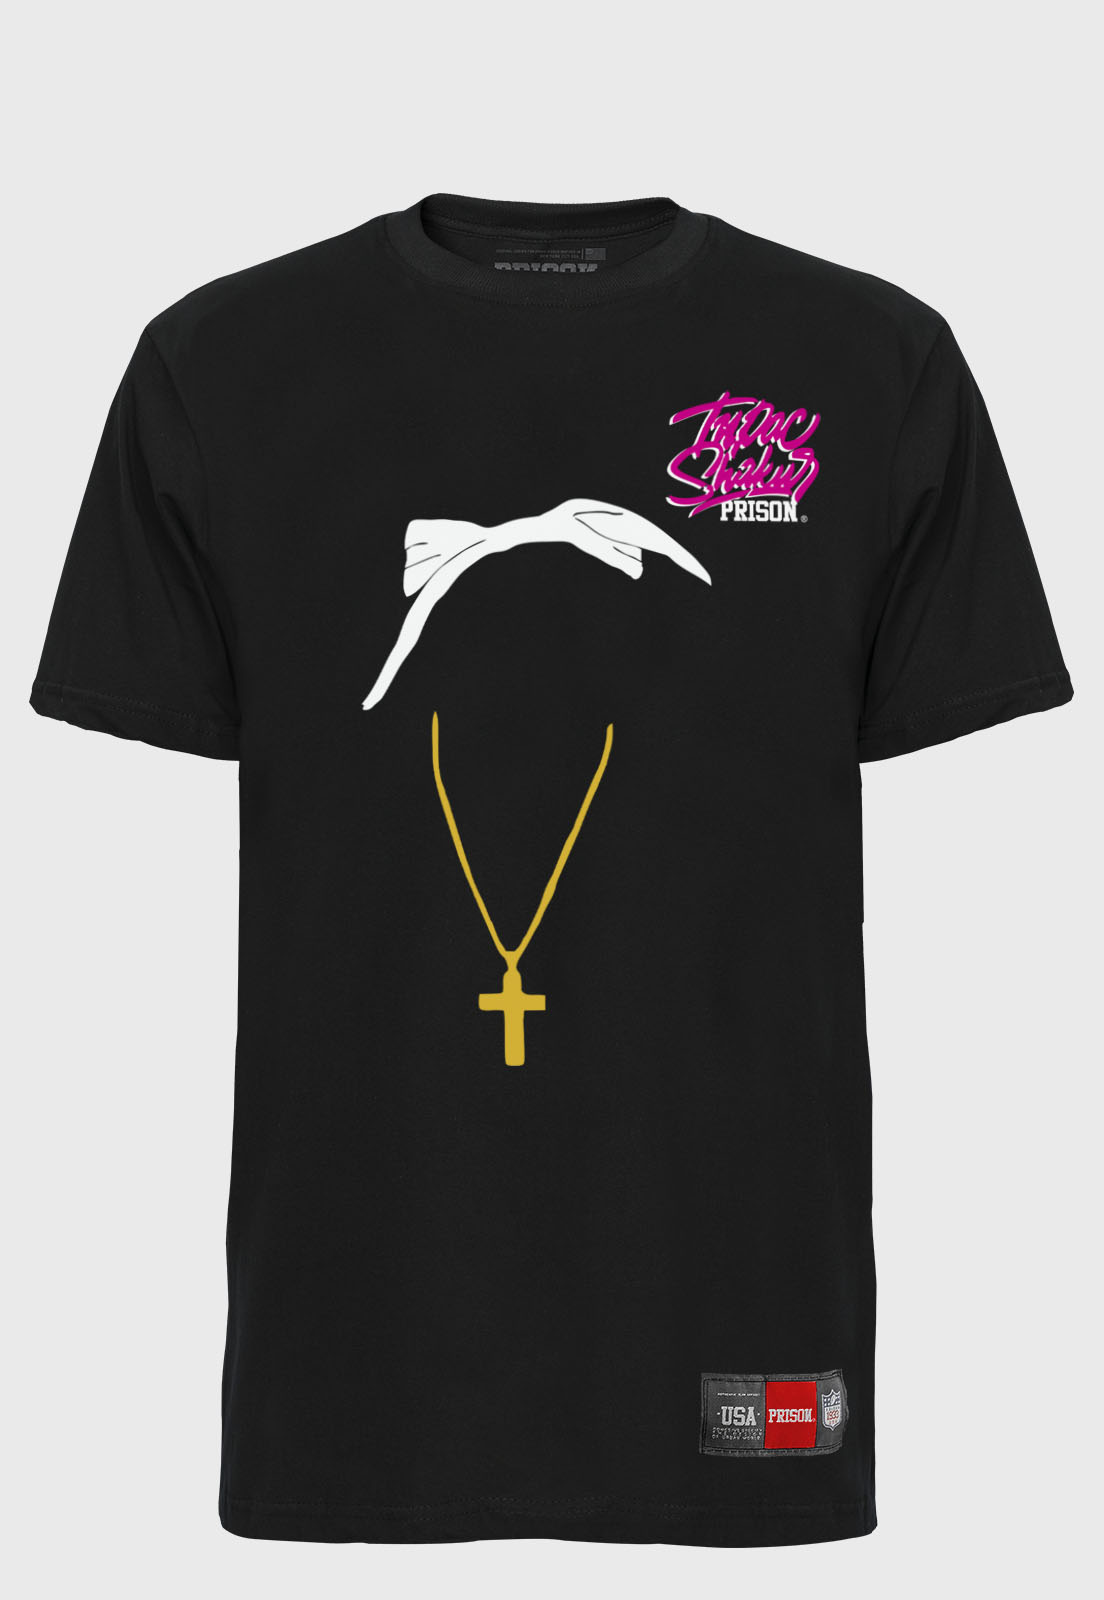 Camiseta Streetwear Prison Tupac Shakur minimalist